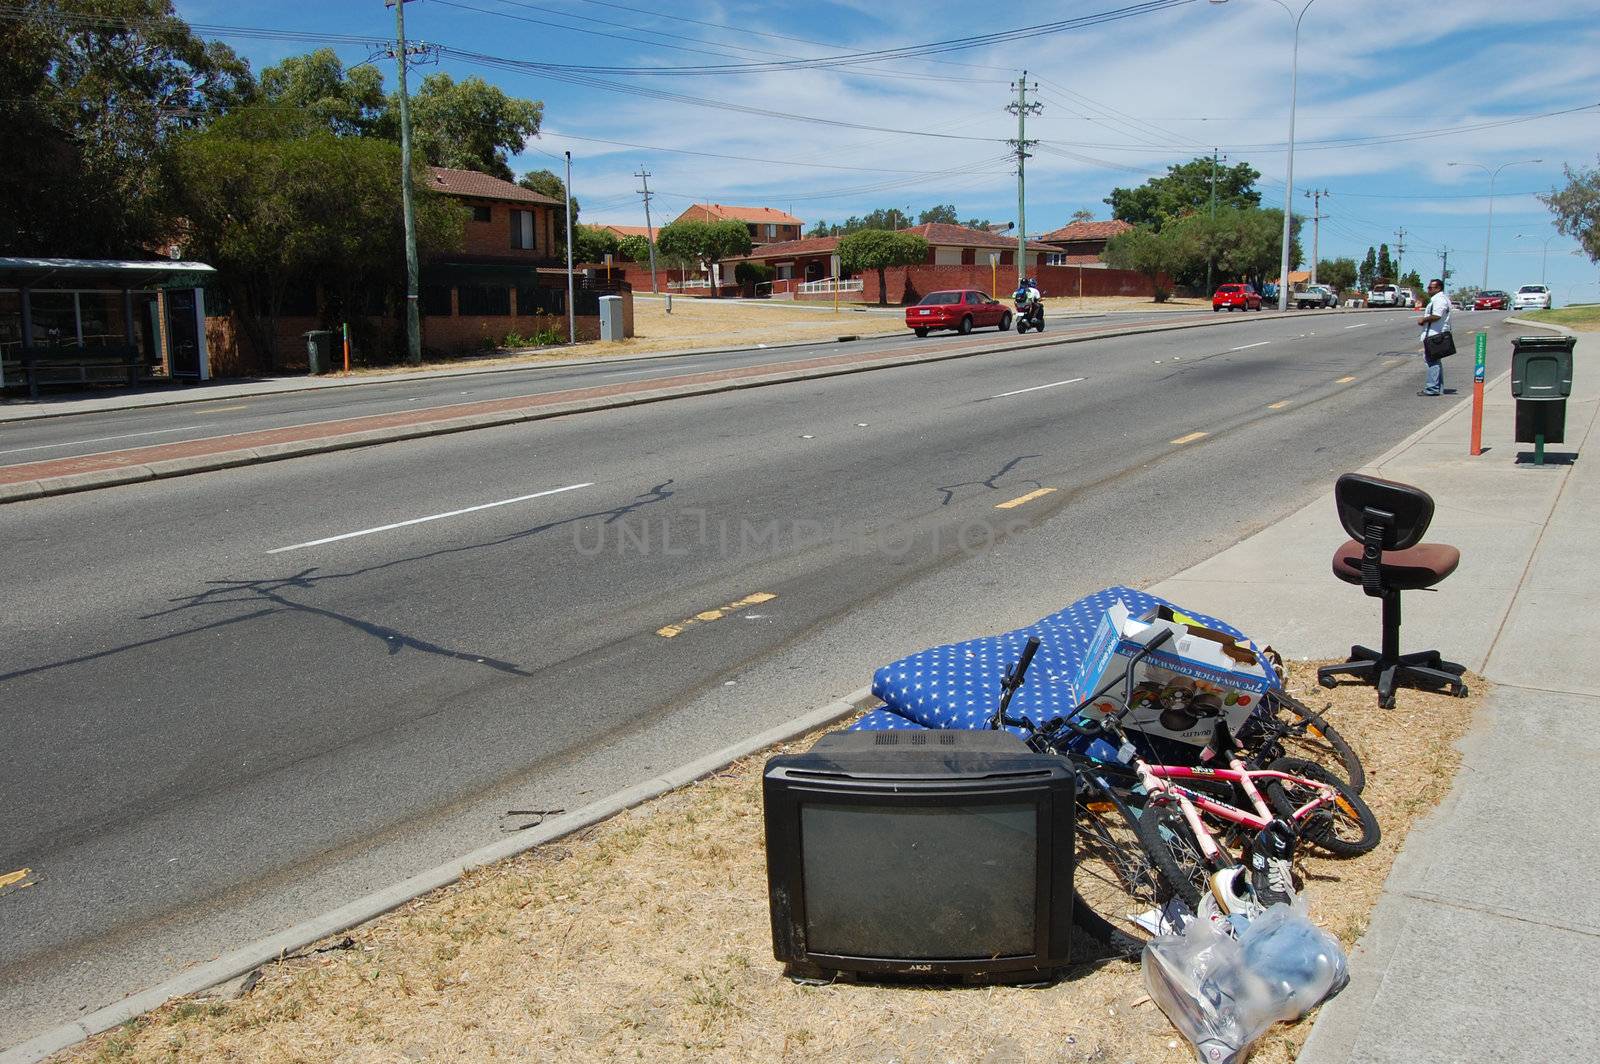 Rubbish collection in the street, Perth, Western Australia